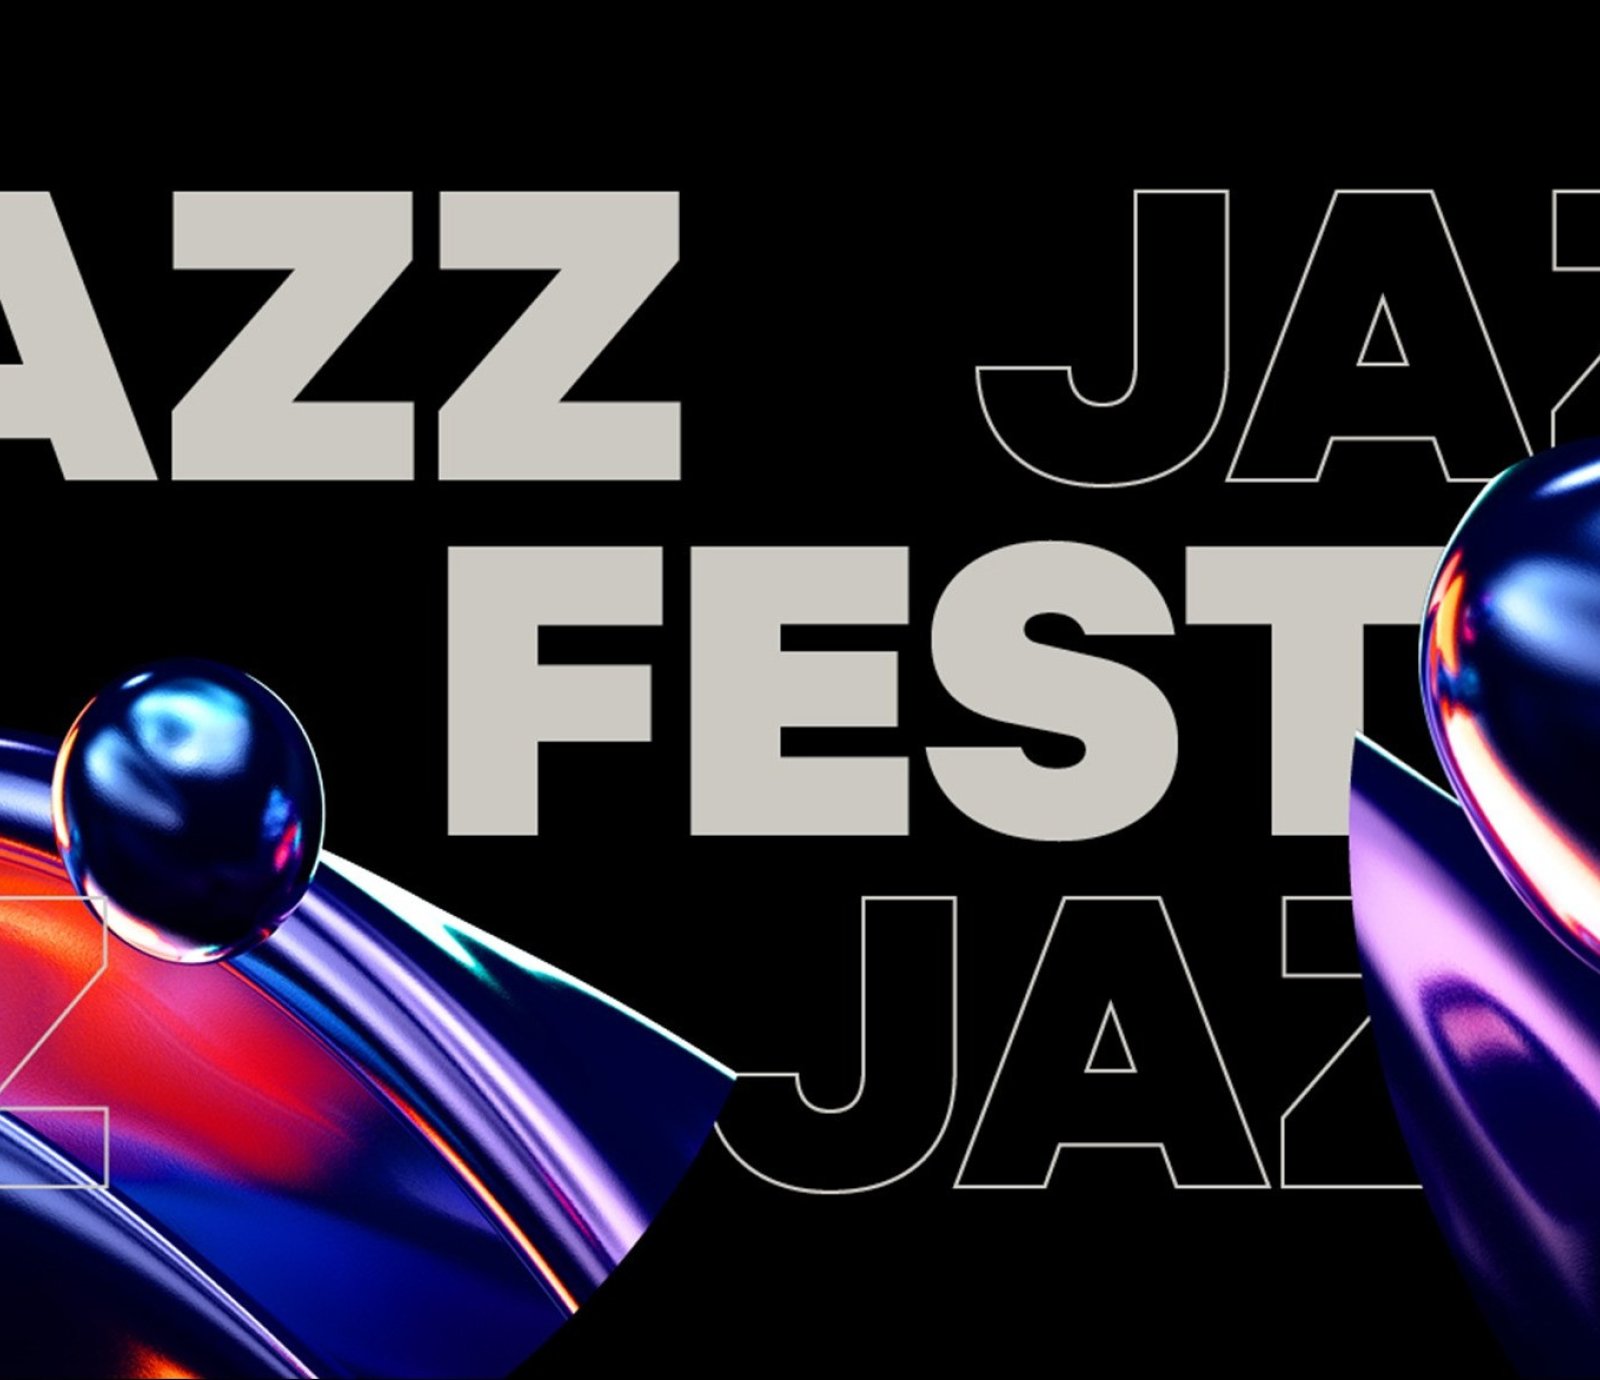 Melbourne International Jazz Festival